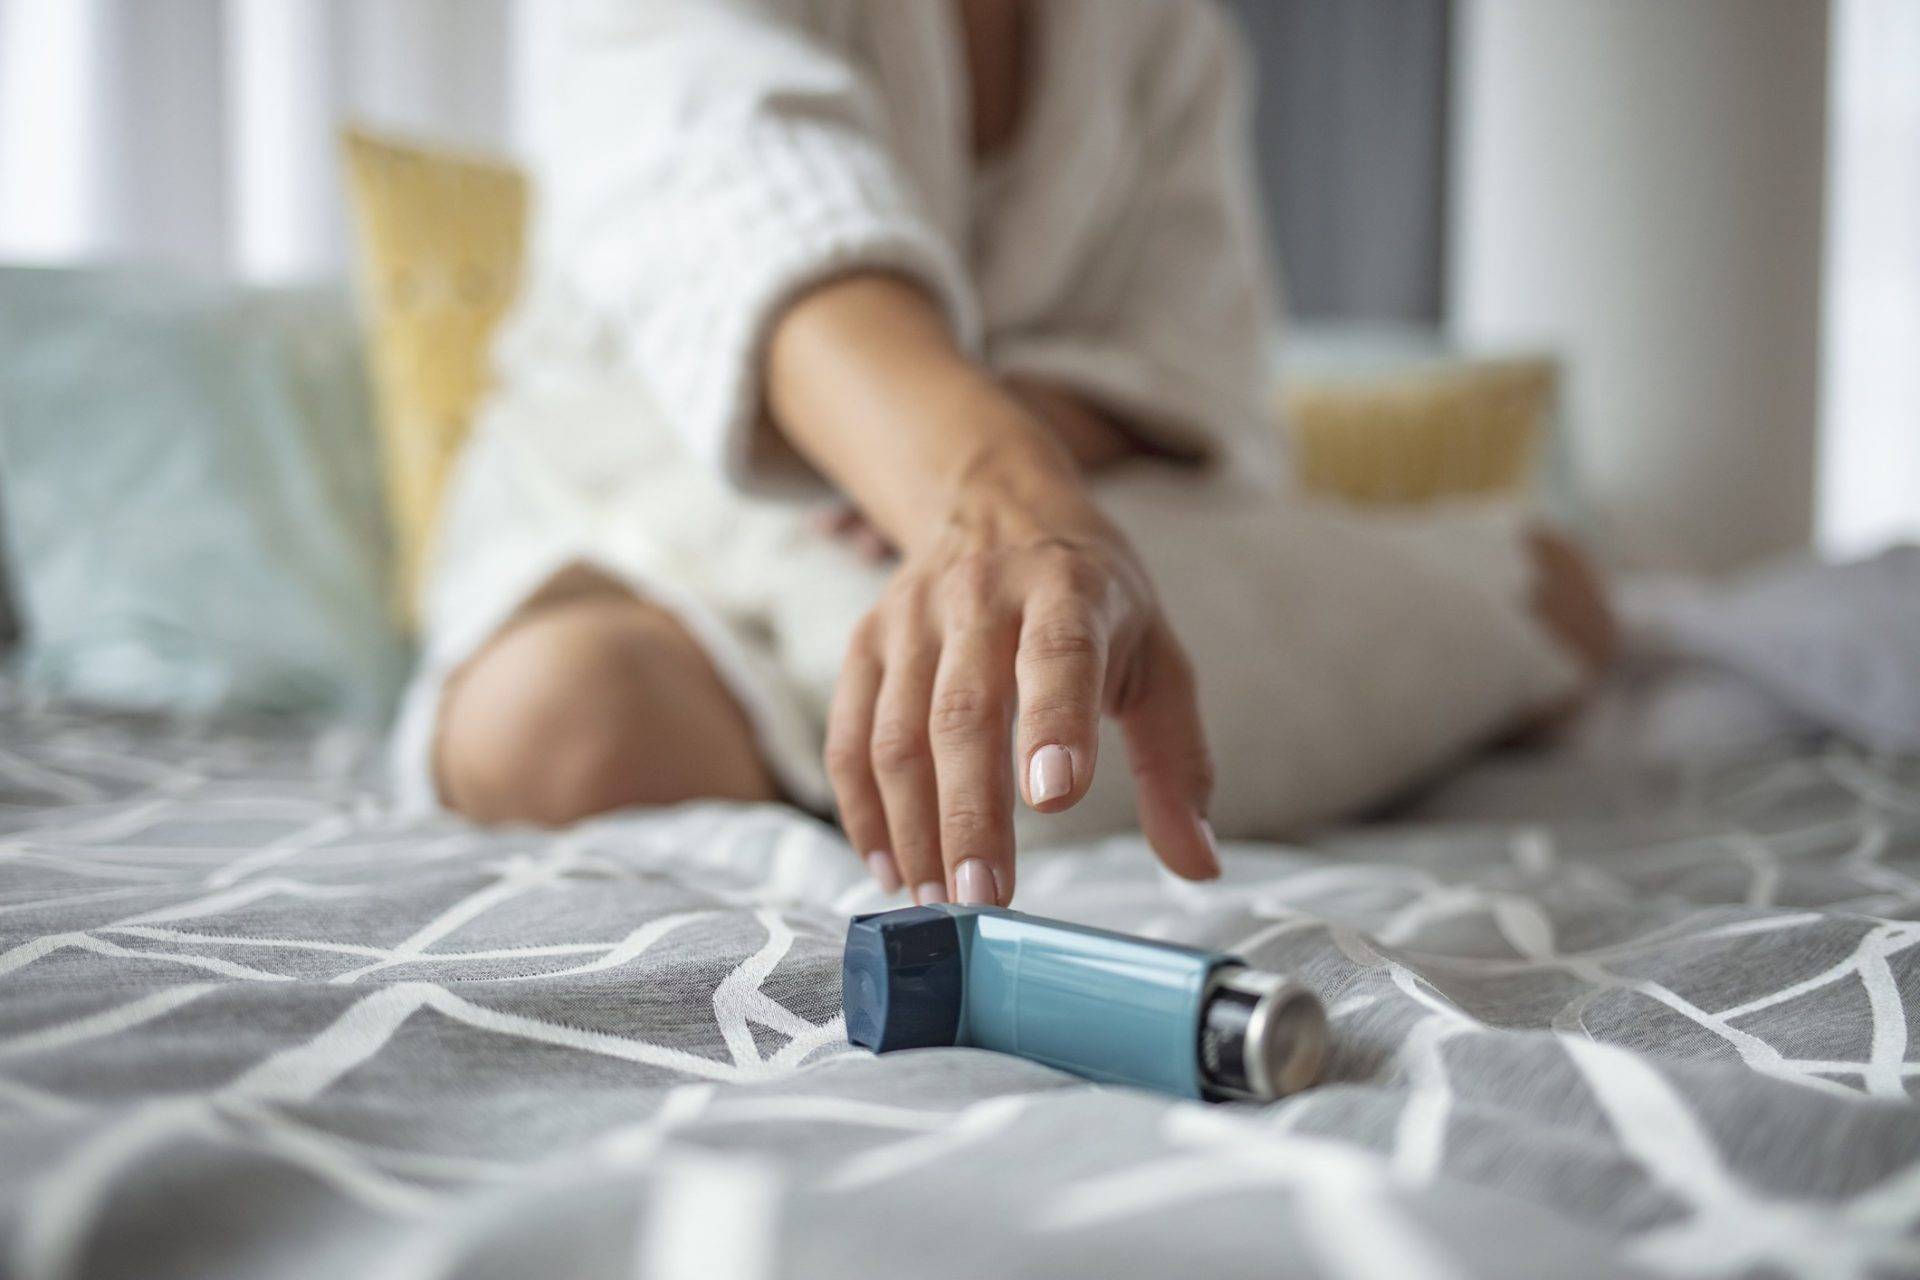 Preventable Asthma Deaths